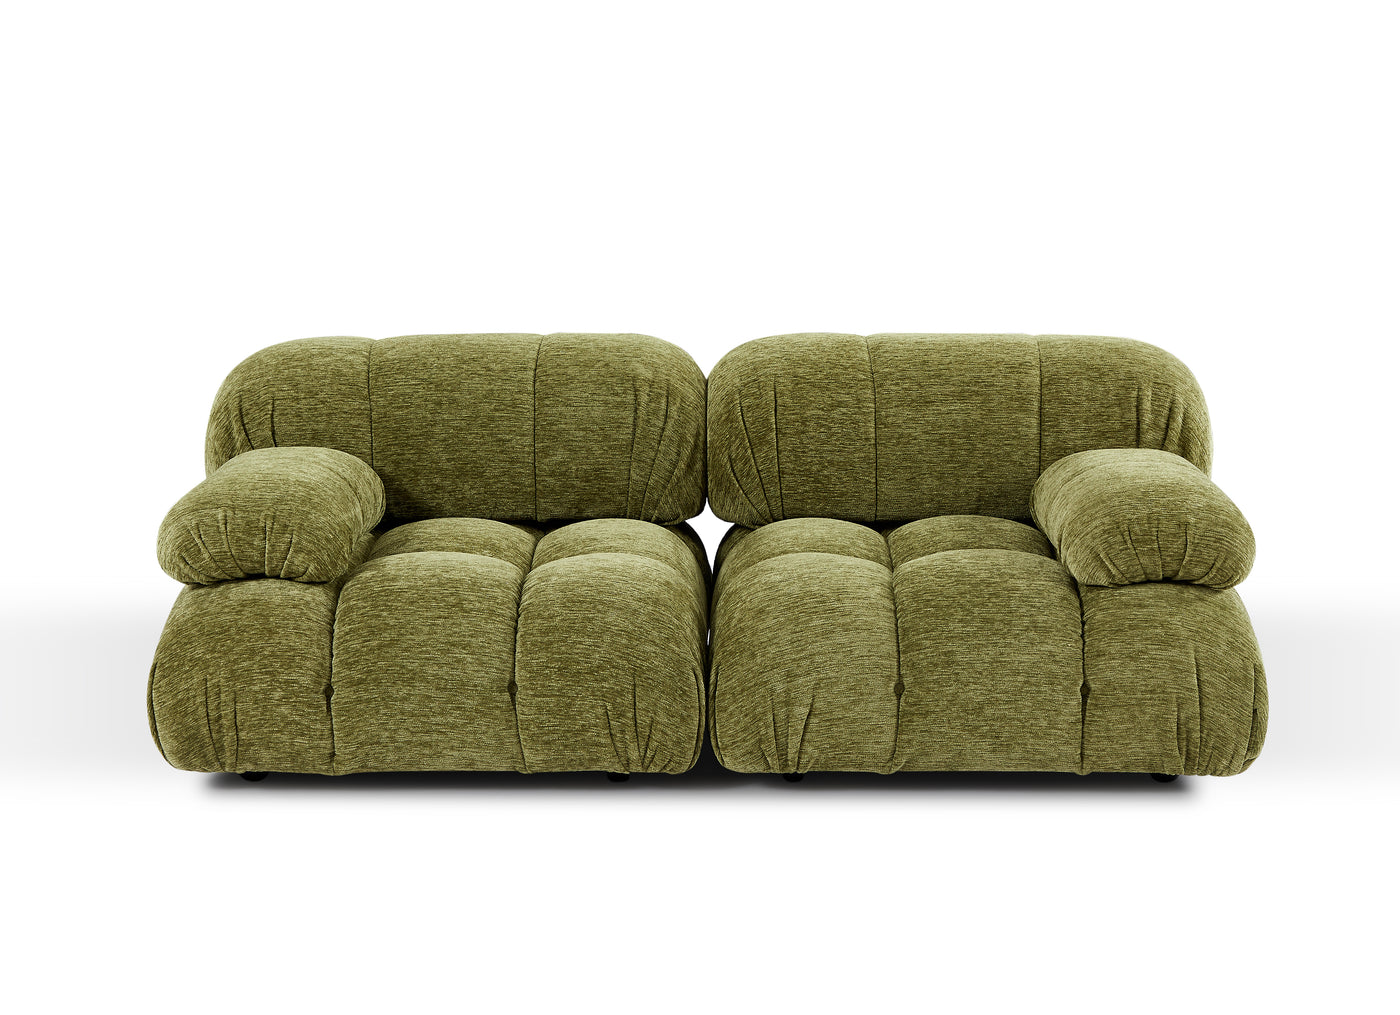 Bellivano2 Love seat (Olive green)